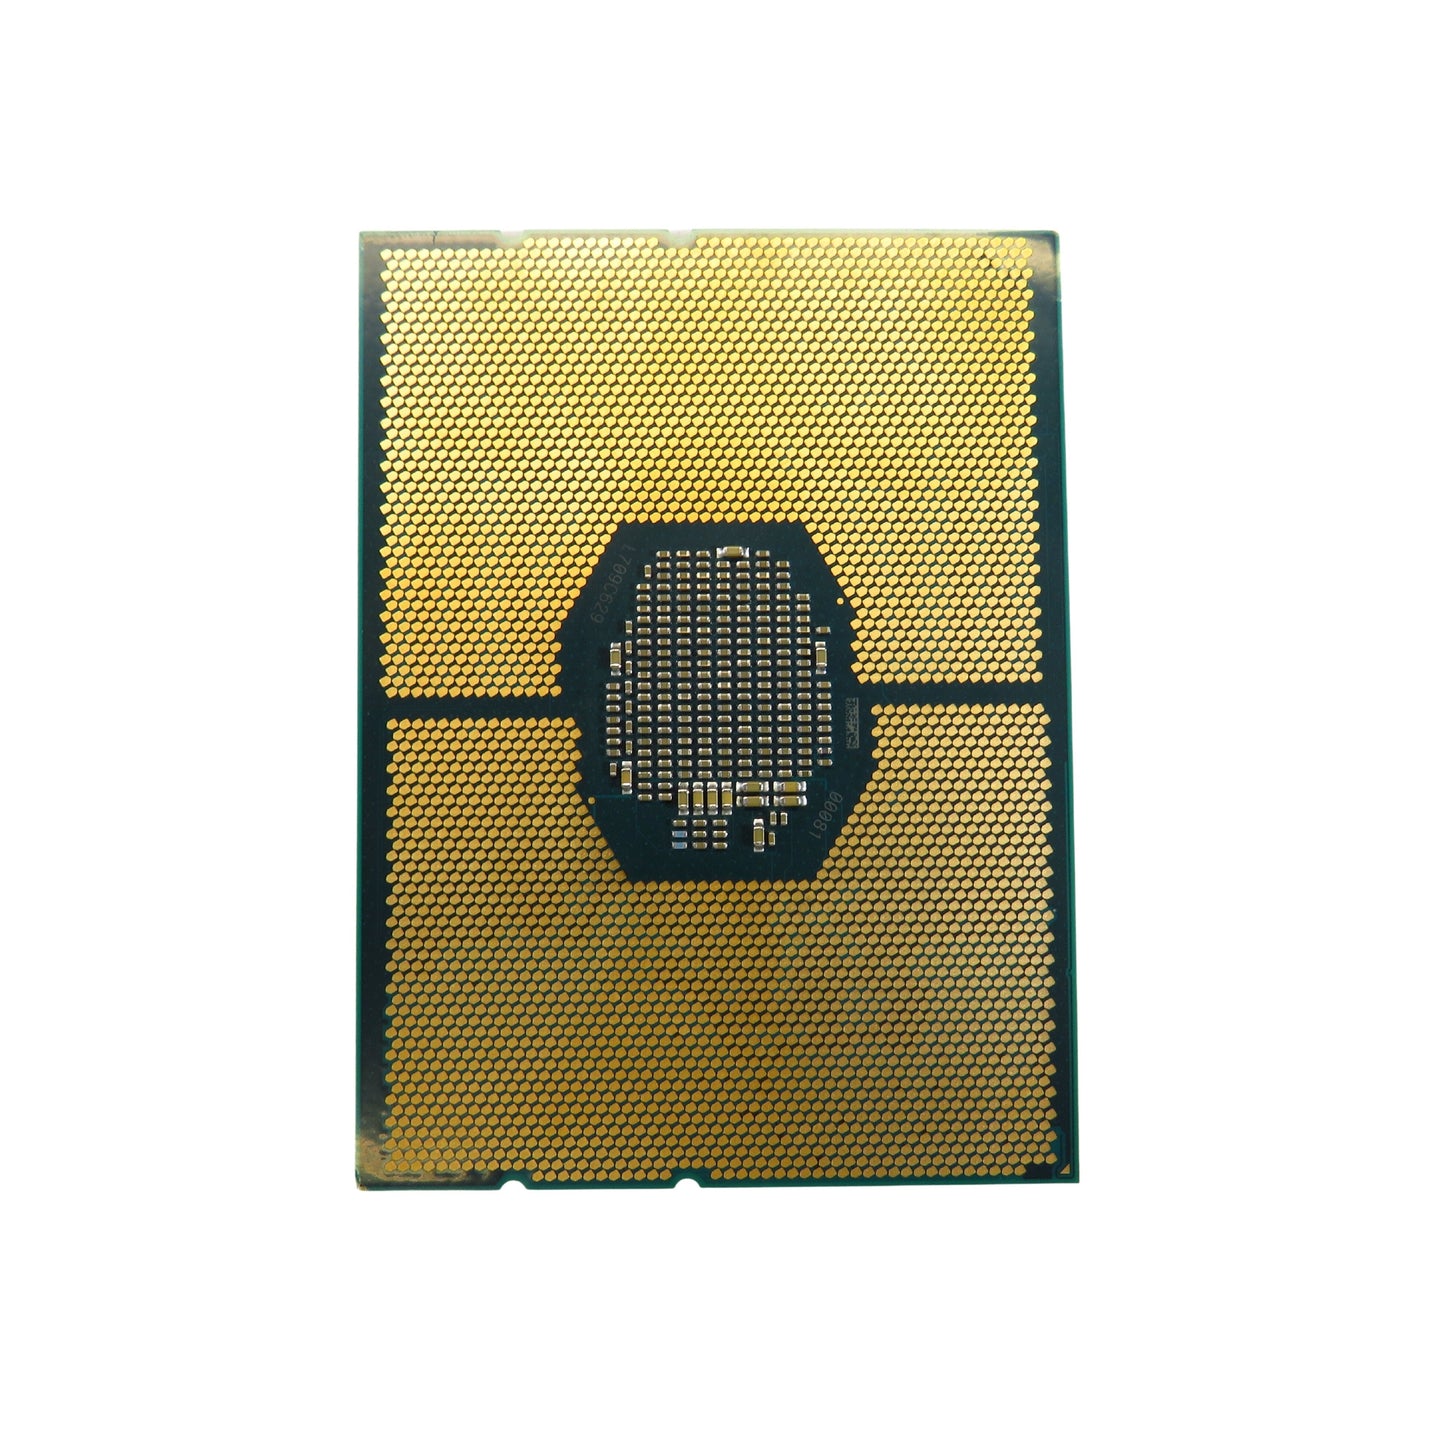 Intel SR3GD Xeon Gold 5120 2.2GHz 14 Core LGA3647 Server CPU Processor (Refurbished)